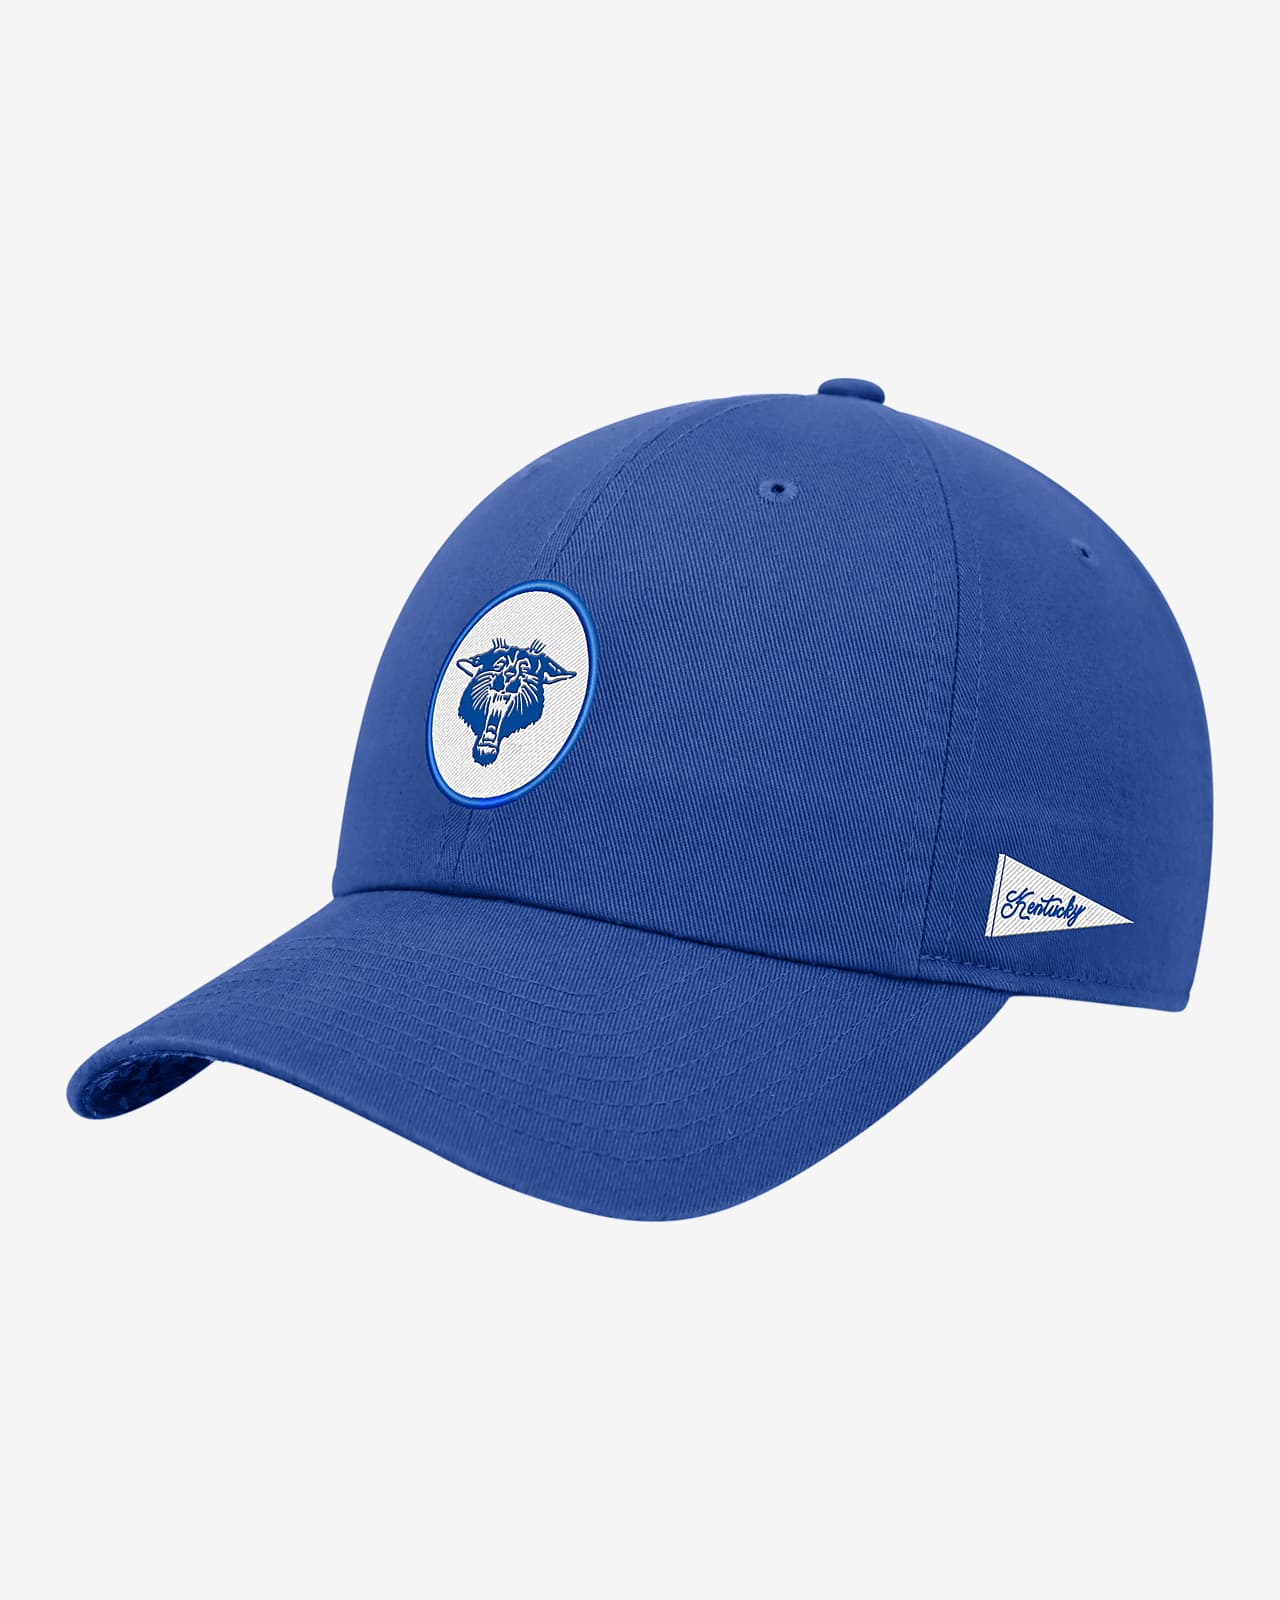 Kentucky Logo Nike College Adjustable Cap